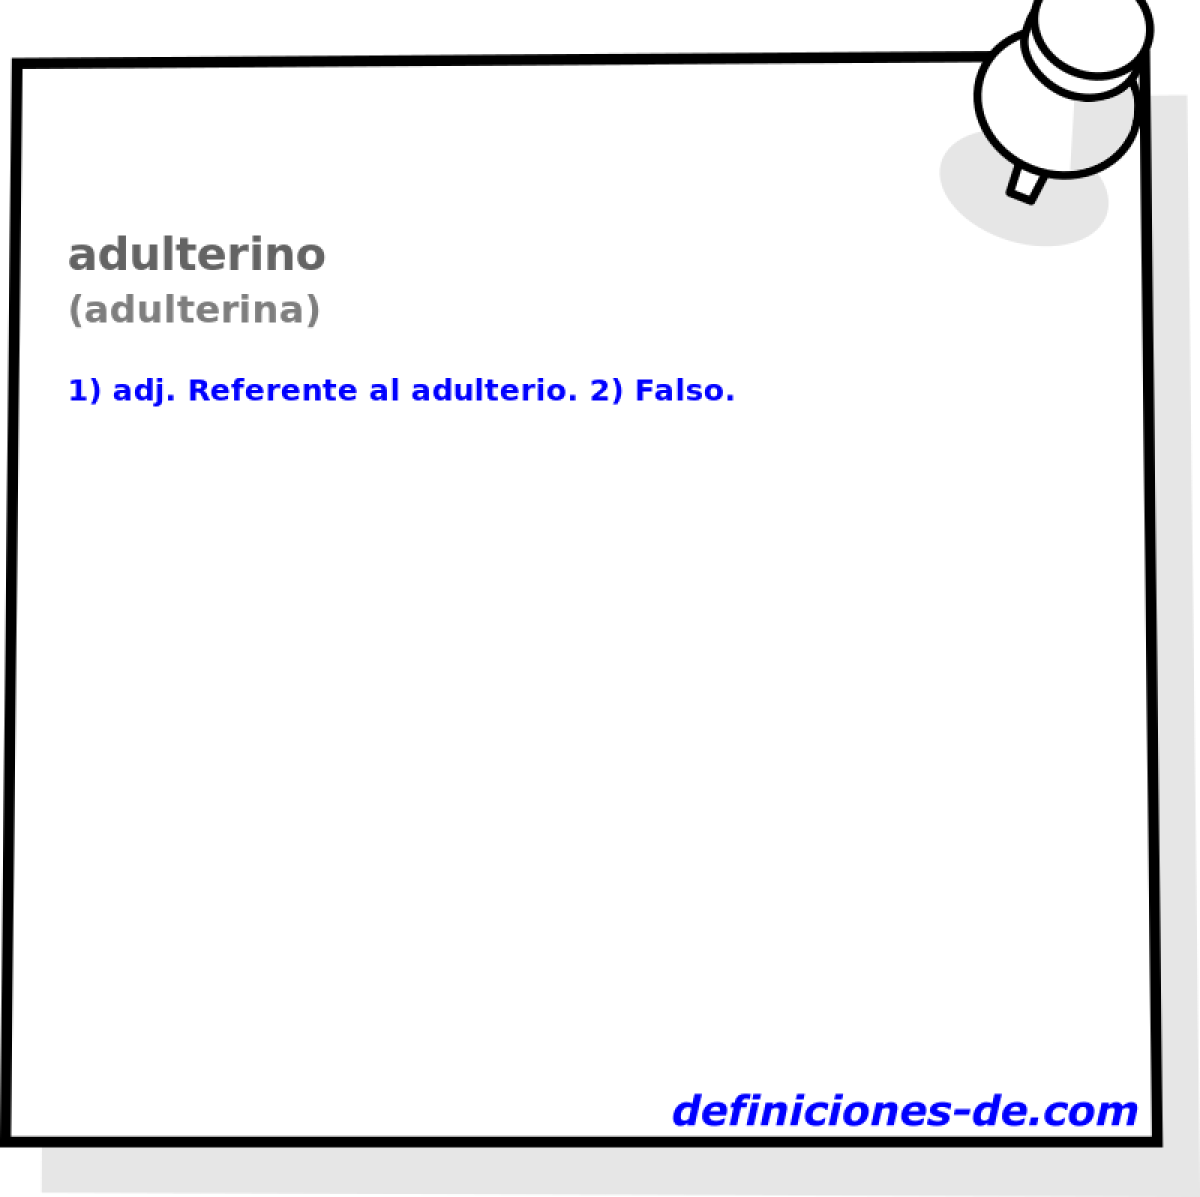 adulterino (adulterina)